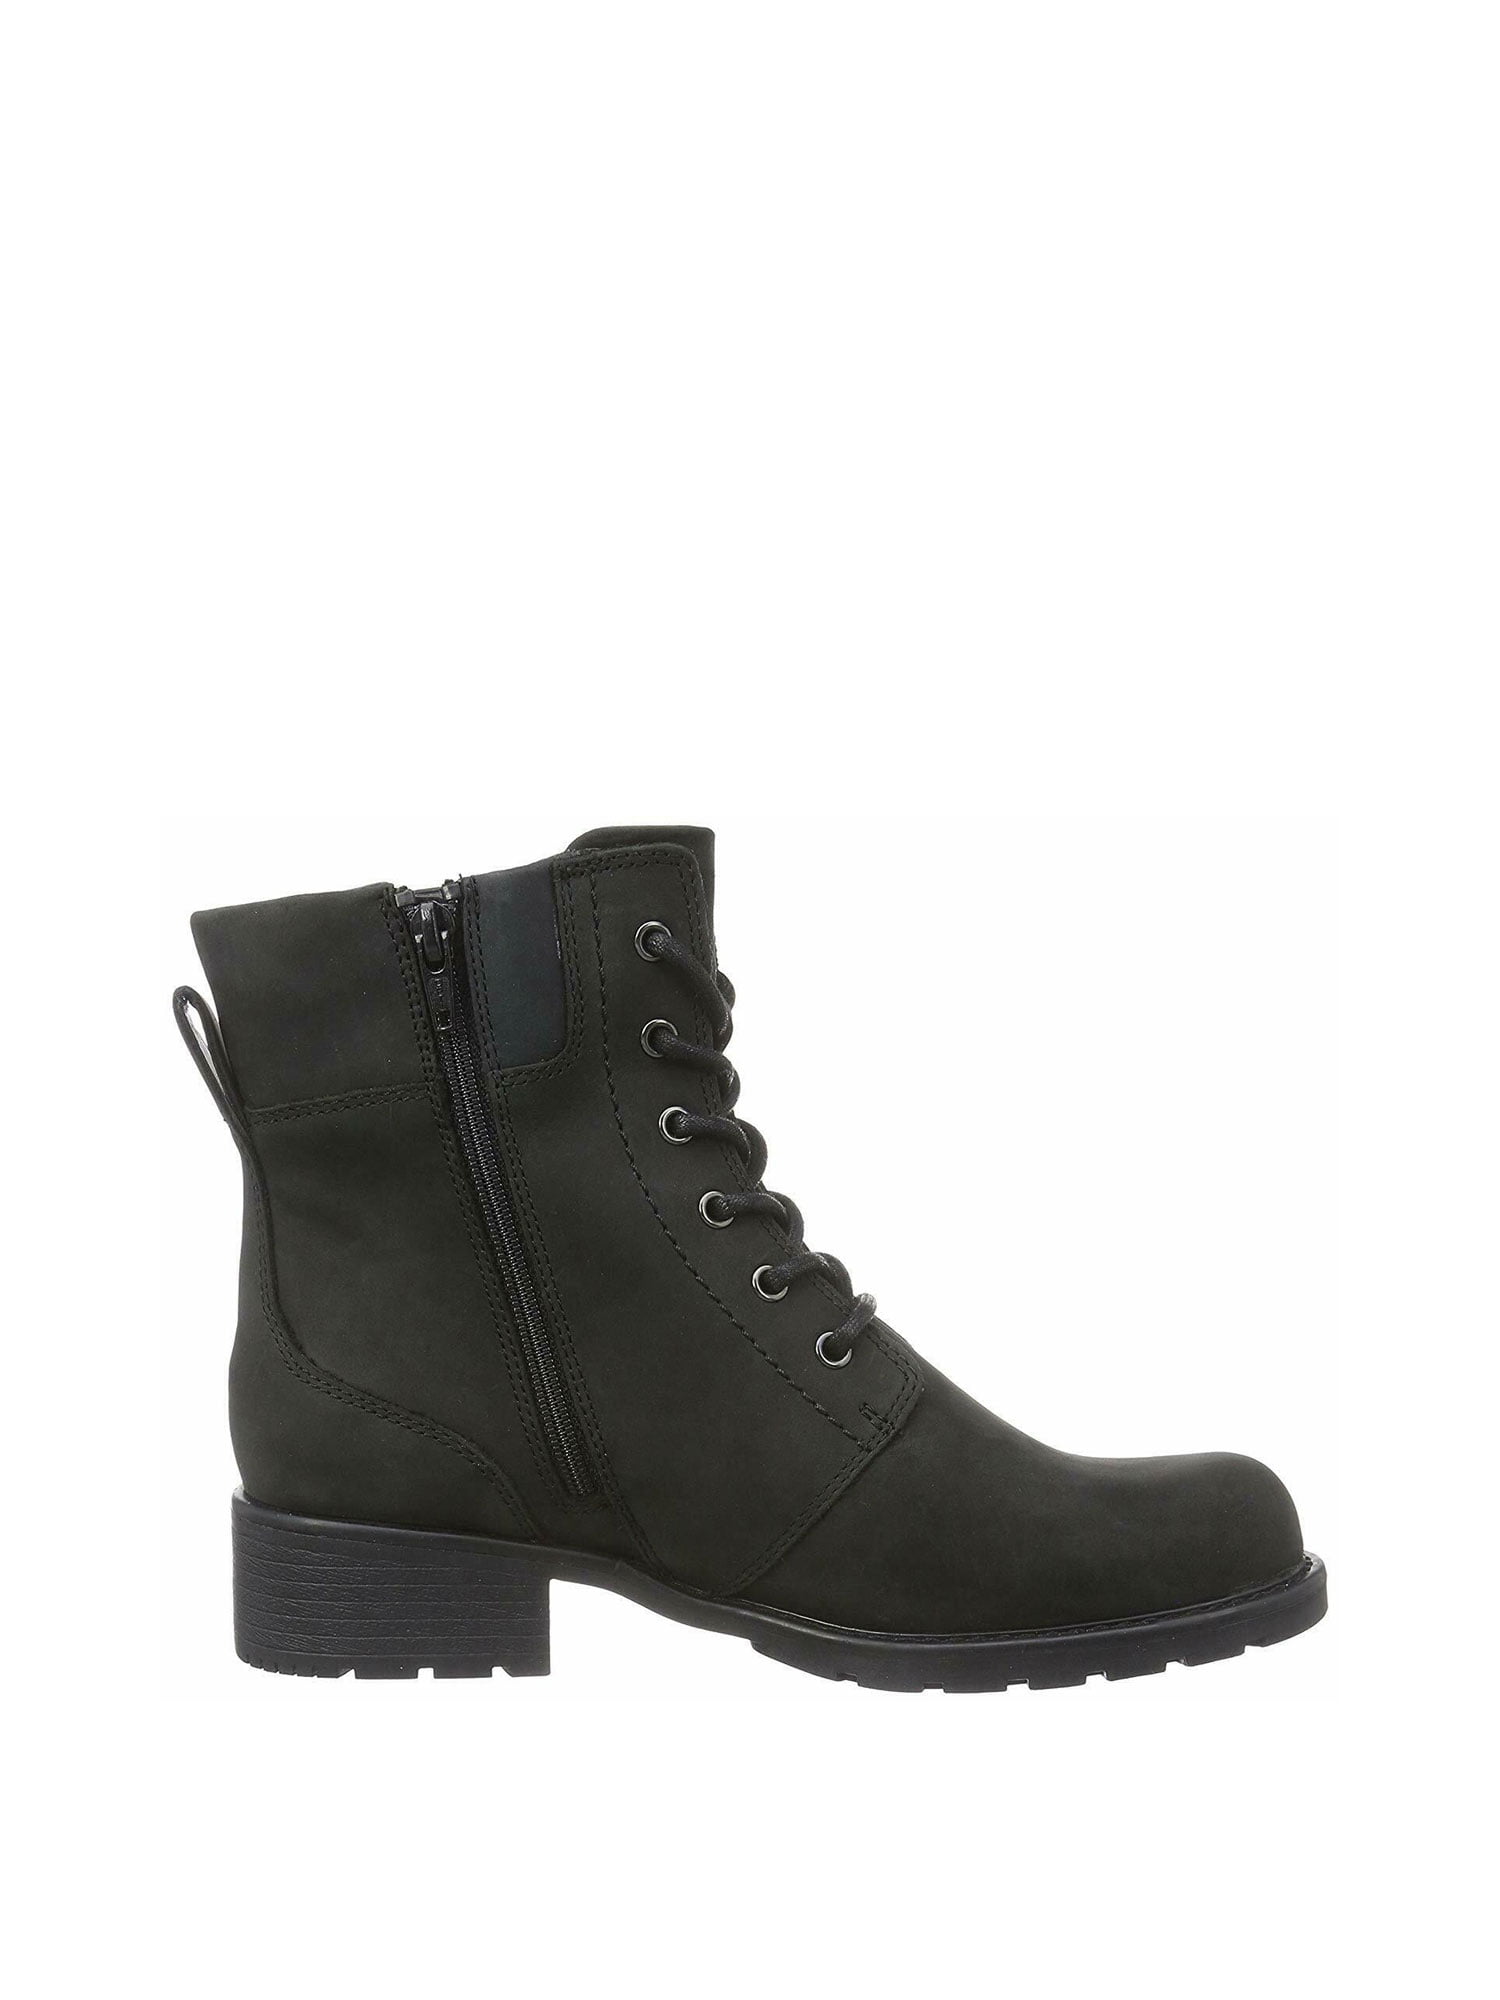 Clarks Orinoco Spice Women's Leather Combat Boots 10935 -